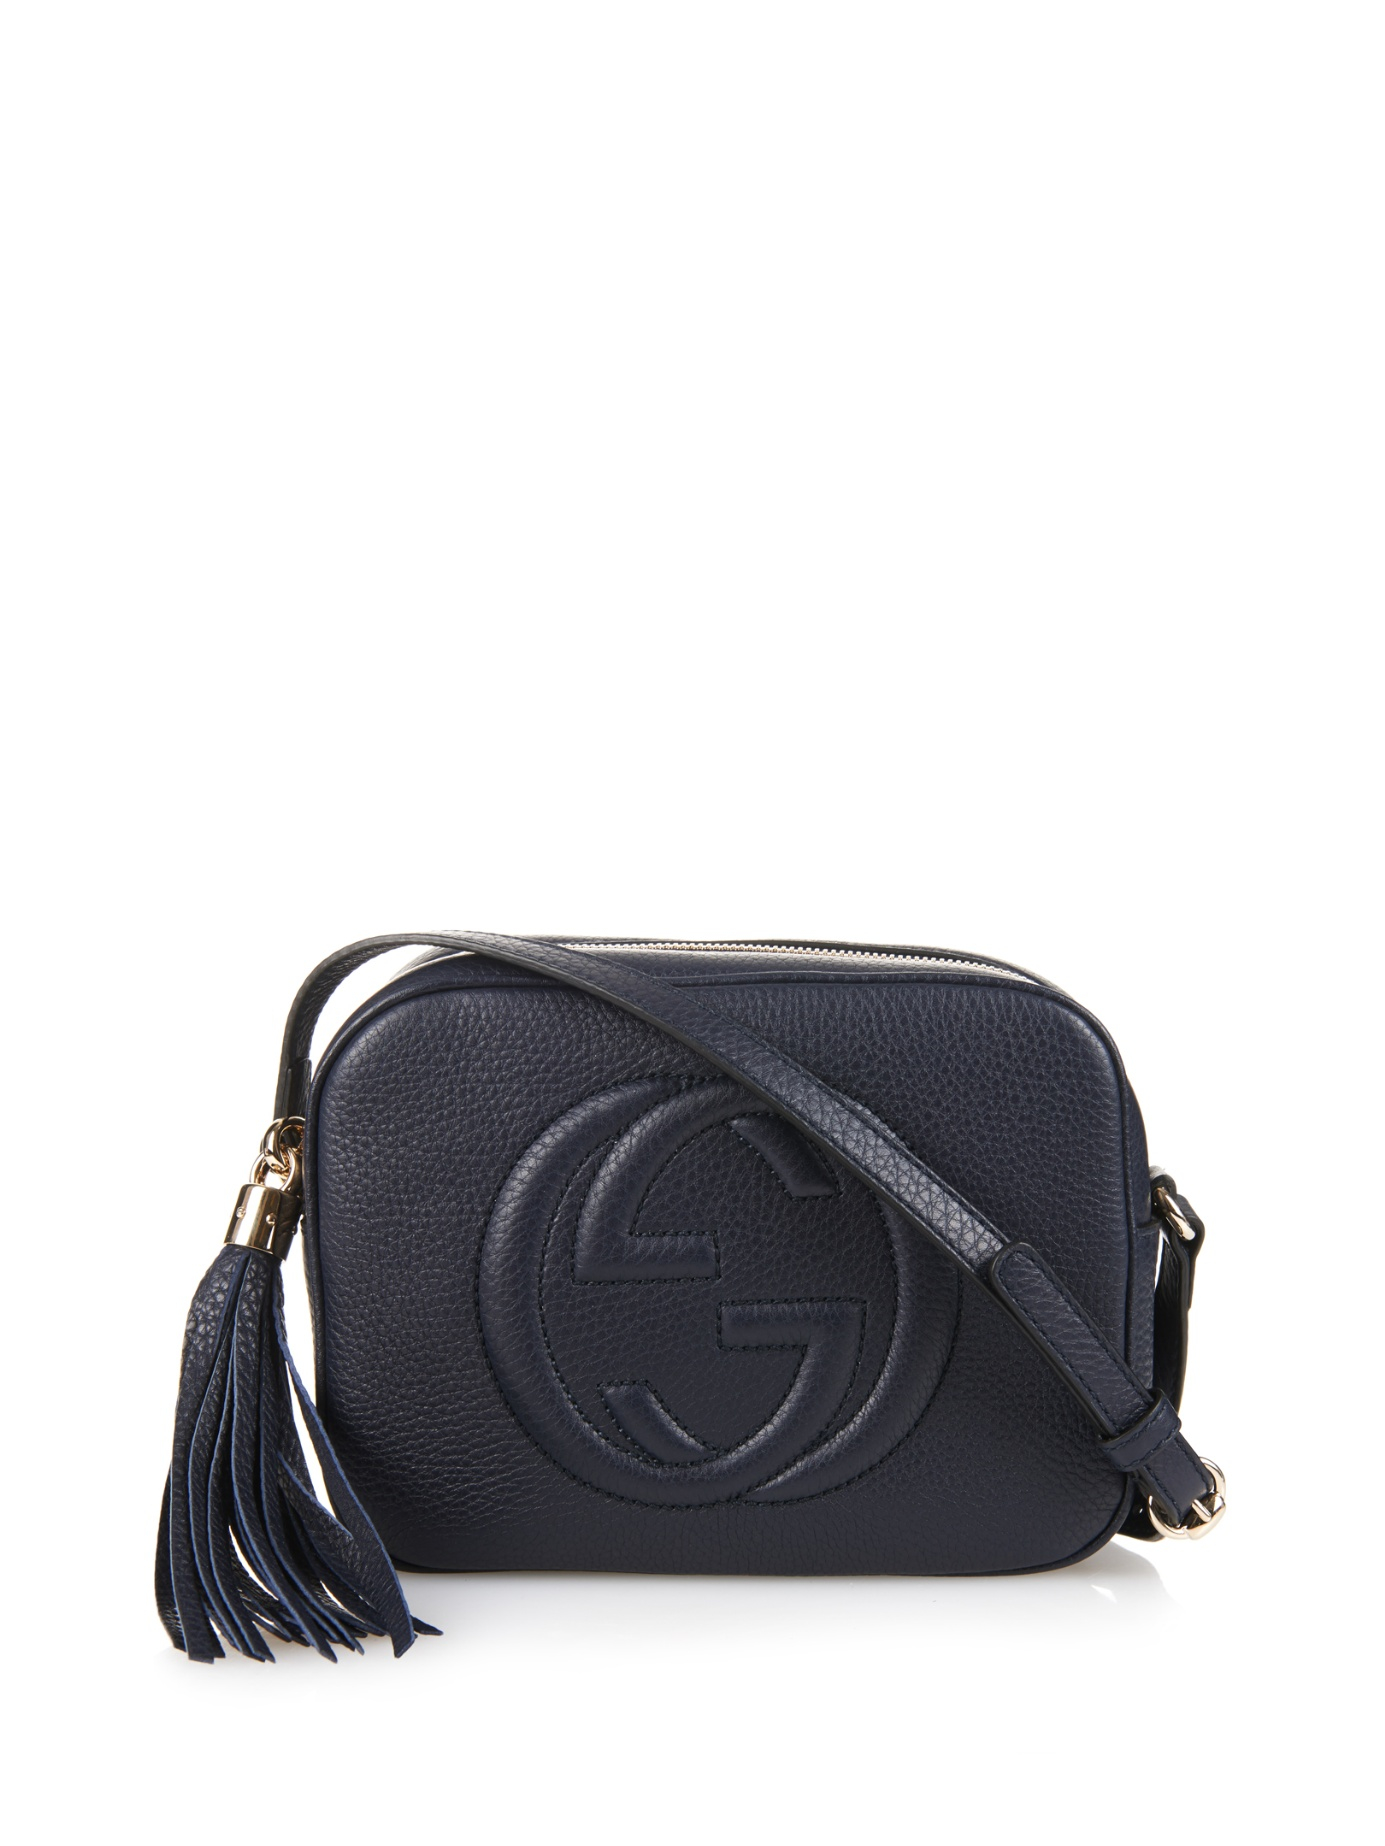 Gucci Soho Leather Cross-body Bag in Black | Lyst